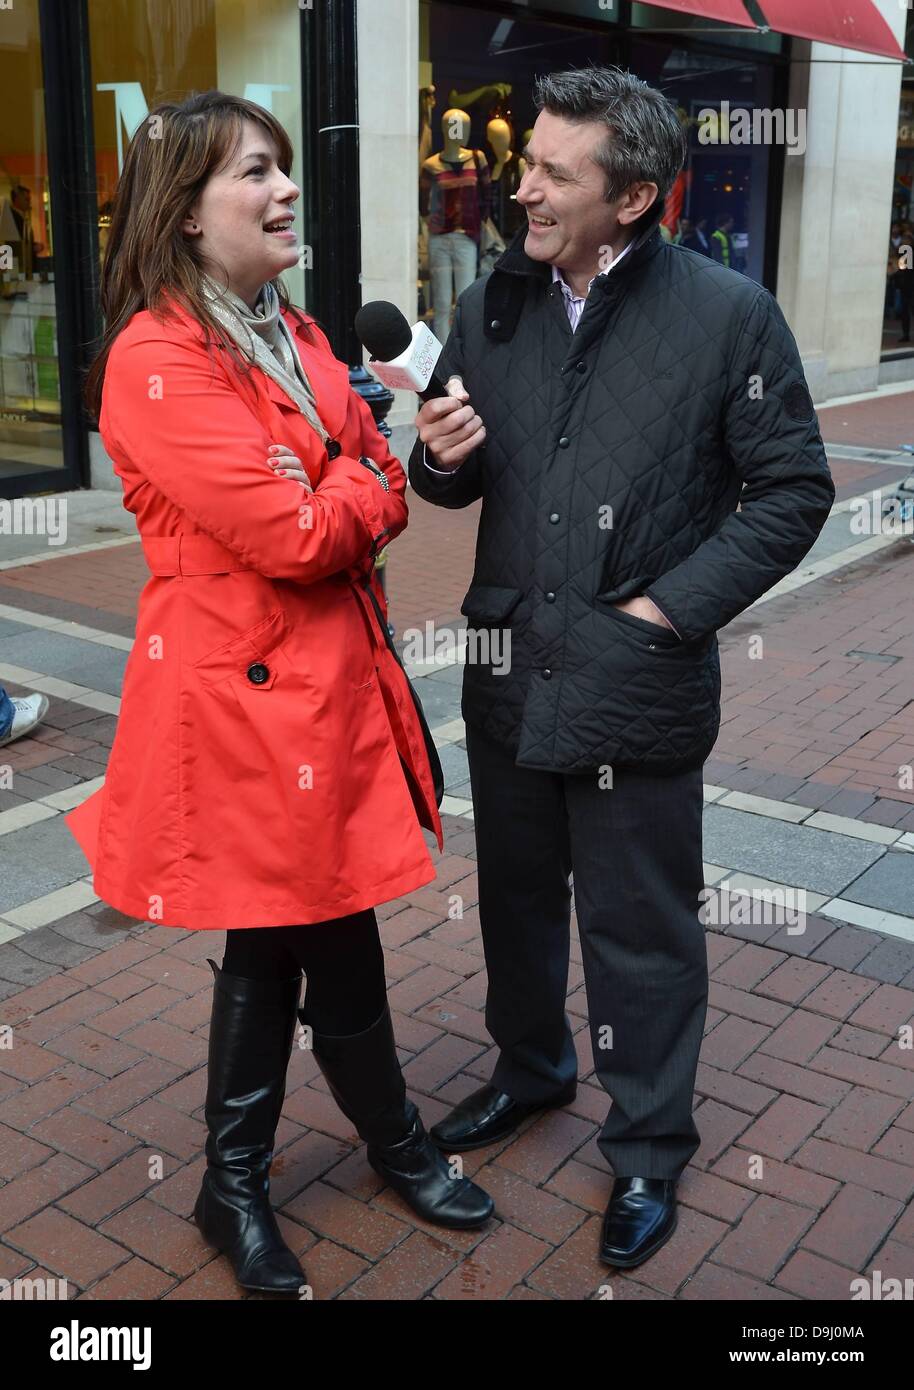 TV3 Morning Show presenter Martin King  interviewing shoppers on Grafton Street Dublin, Ireland - 30.03.11 Stock Photo